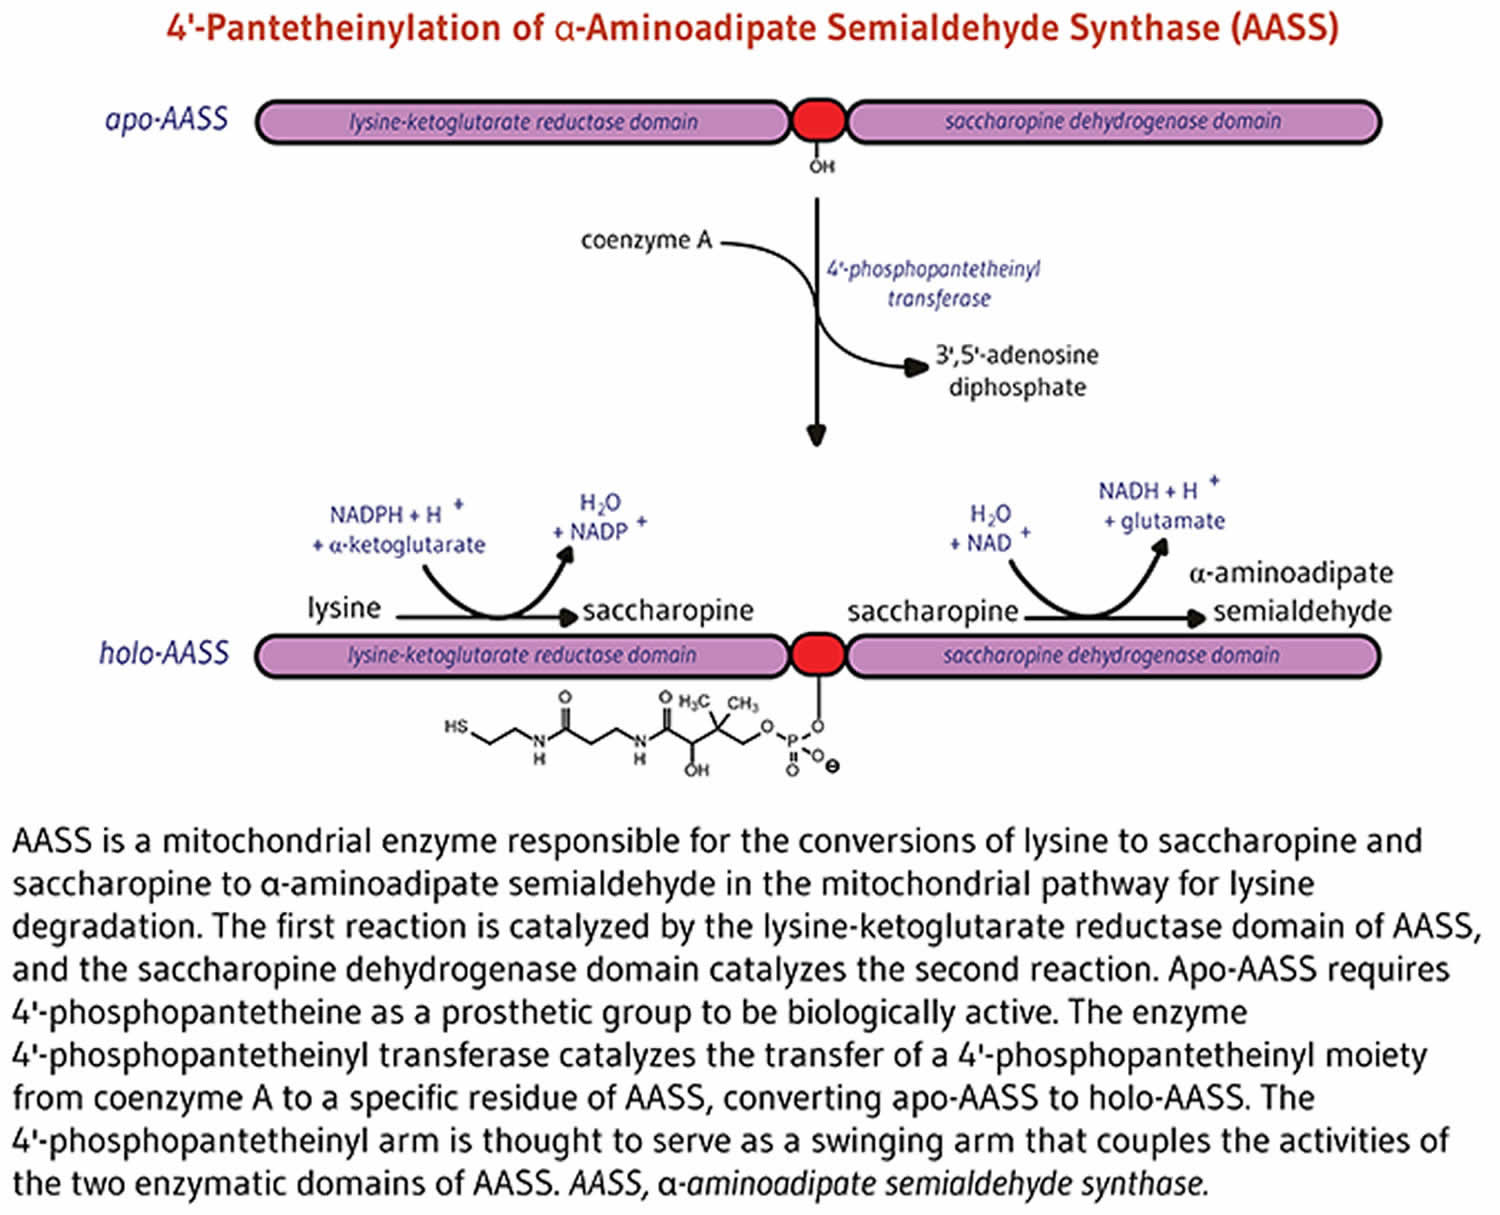 Alpha-aminoadipate semialdehyde synthase function